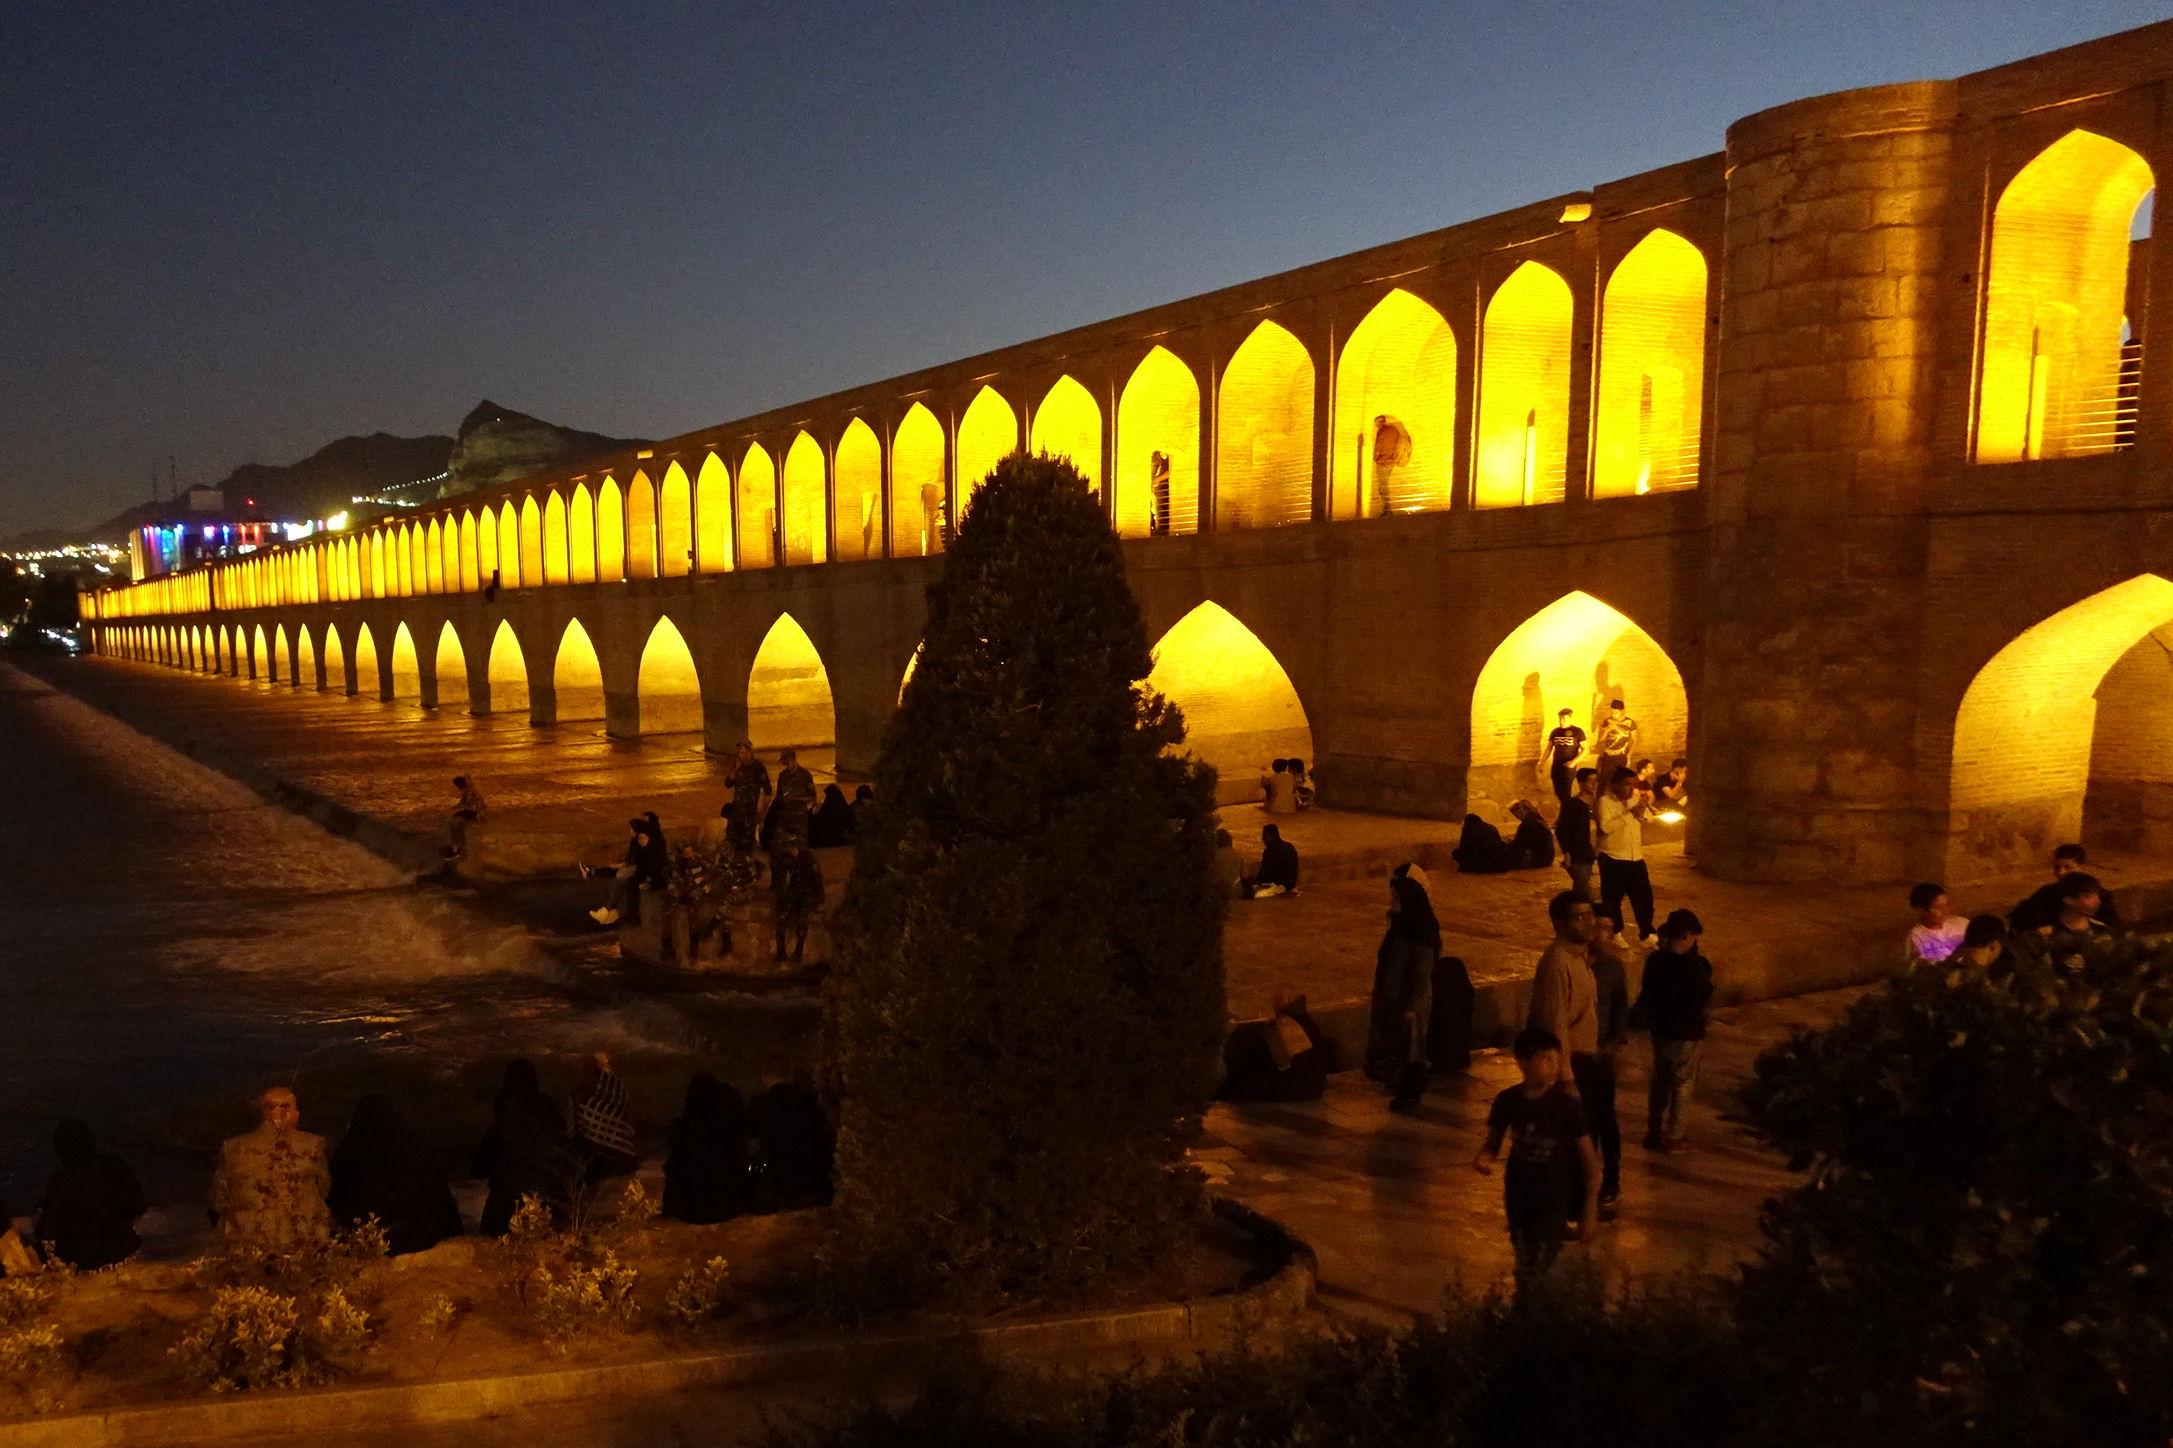 Si-seh-pol-Brücke über den Zayandeh-Fluss in Isfahan